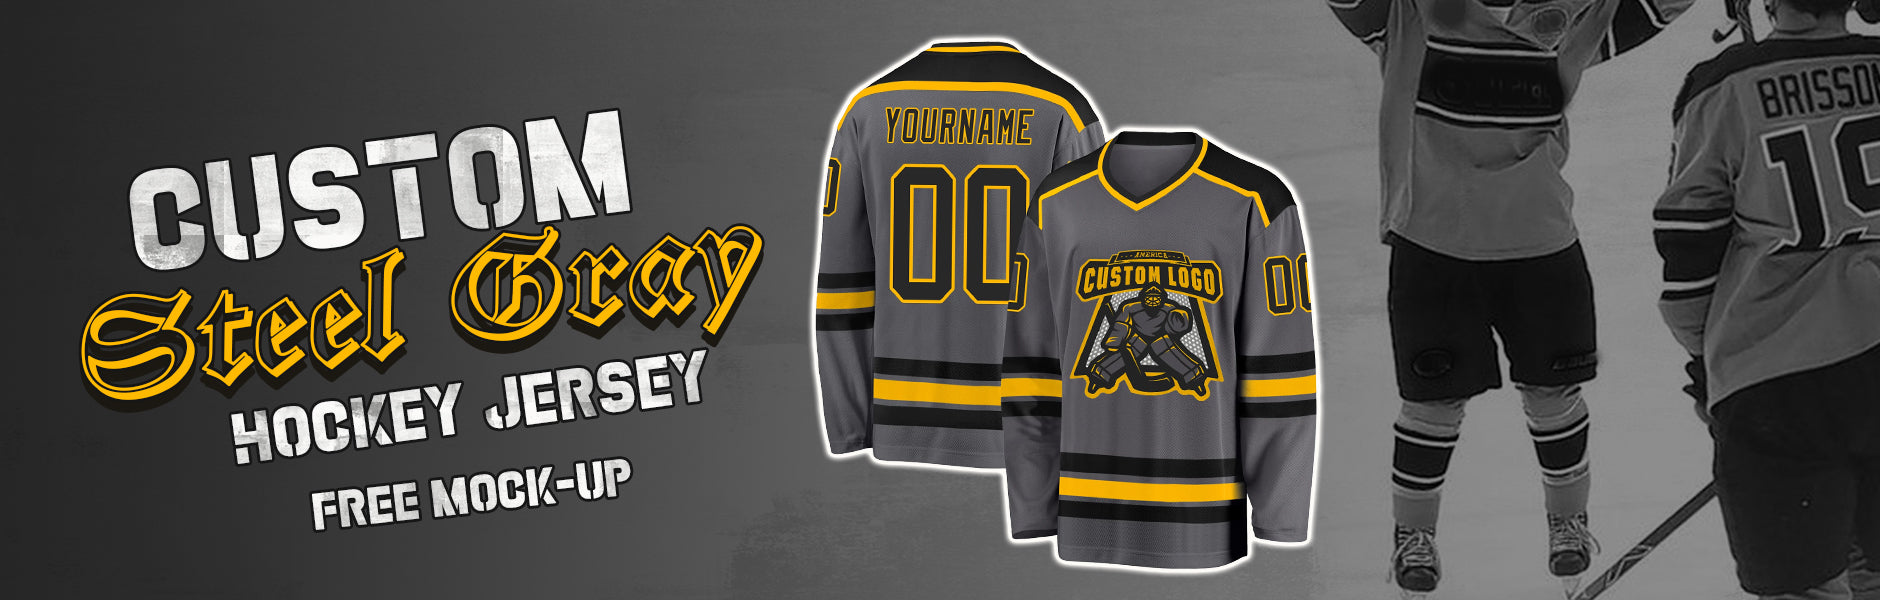 custom hockey steel gray jersey